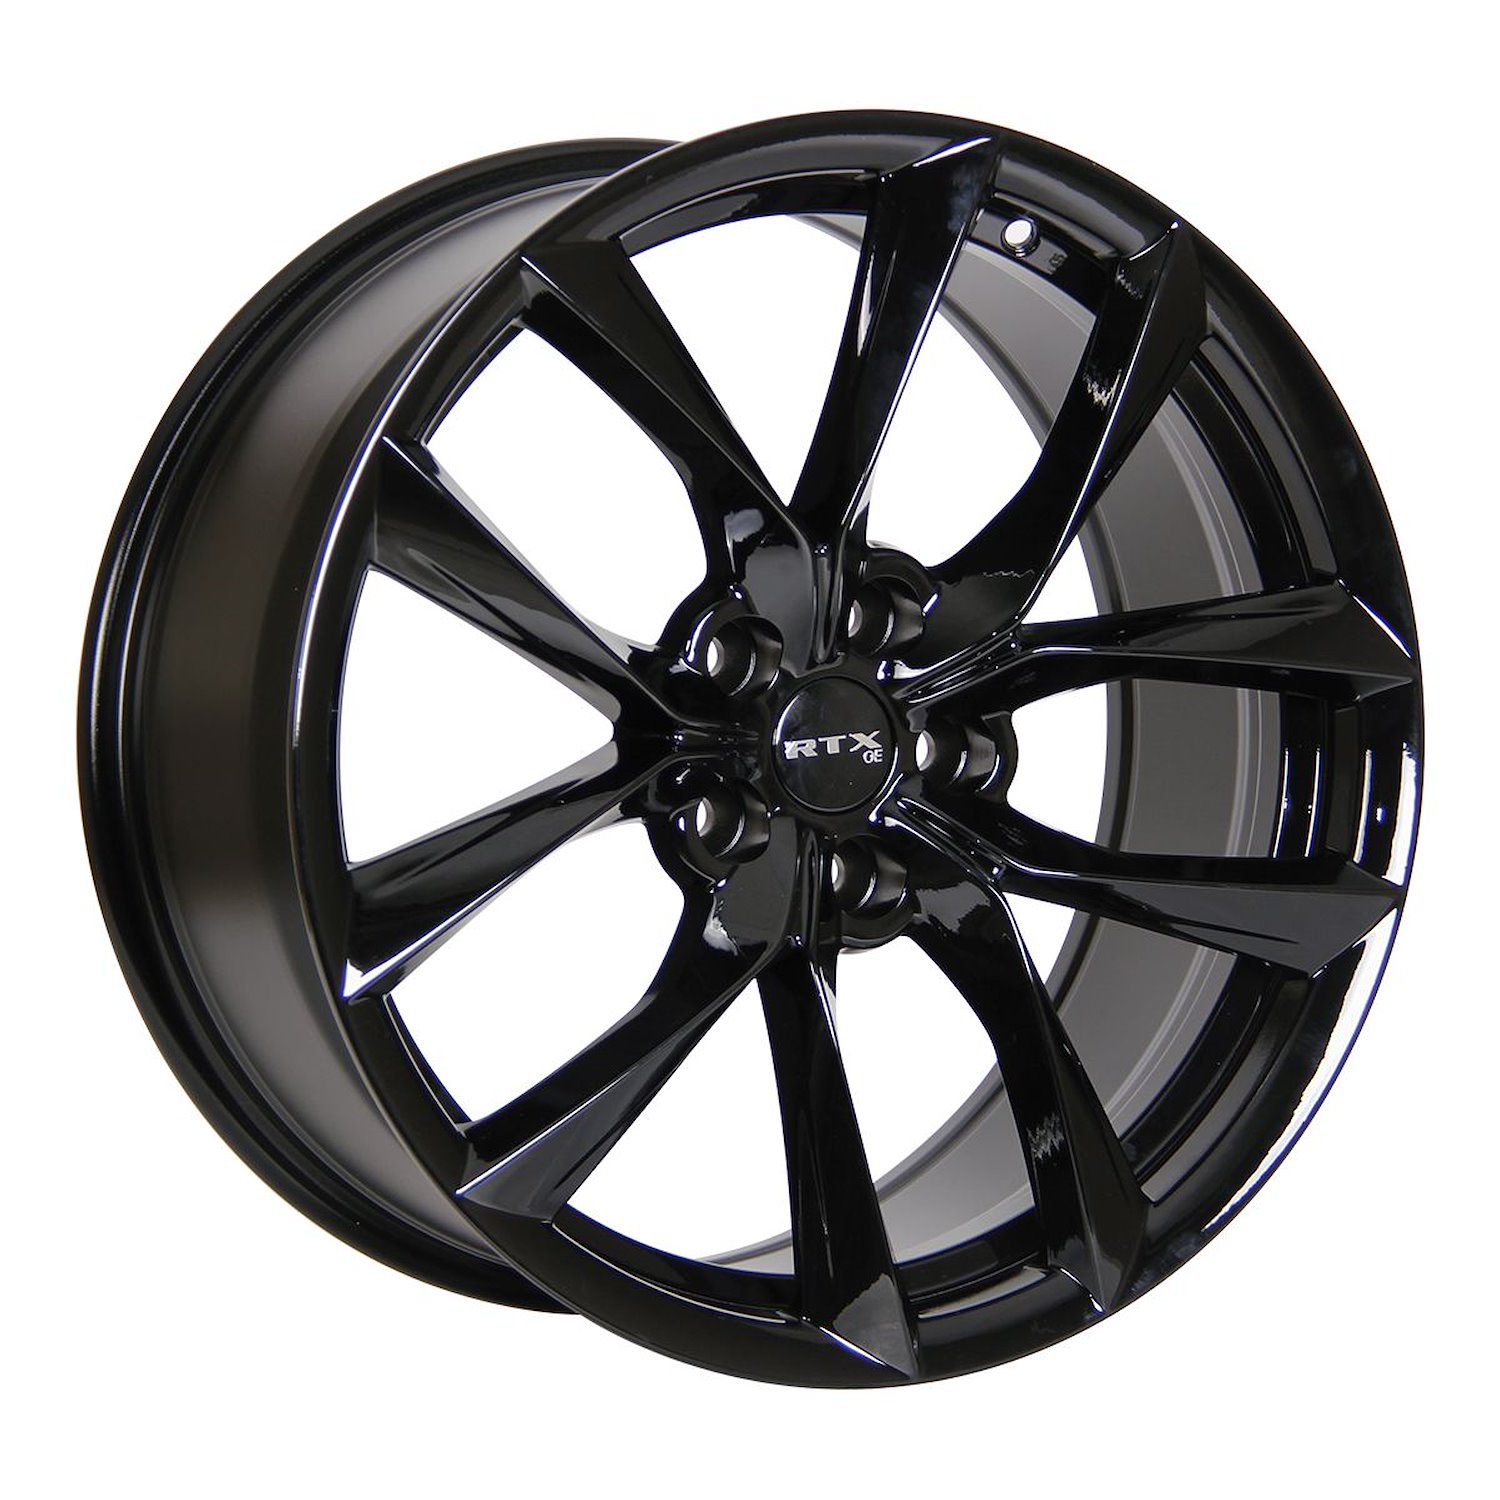 082737 OE-Series Spider Wheel [Size: 19" x 8.50"] Gloss Black Finish